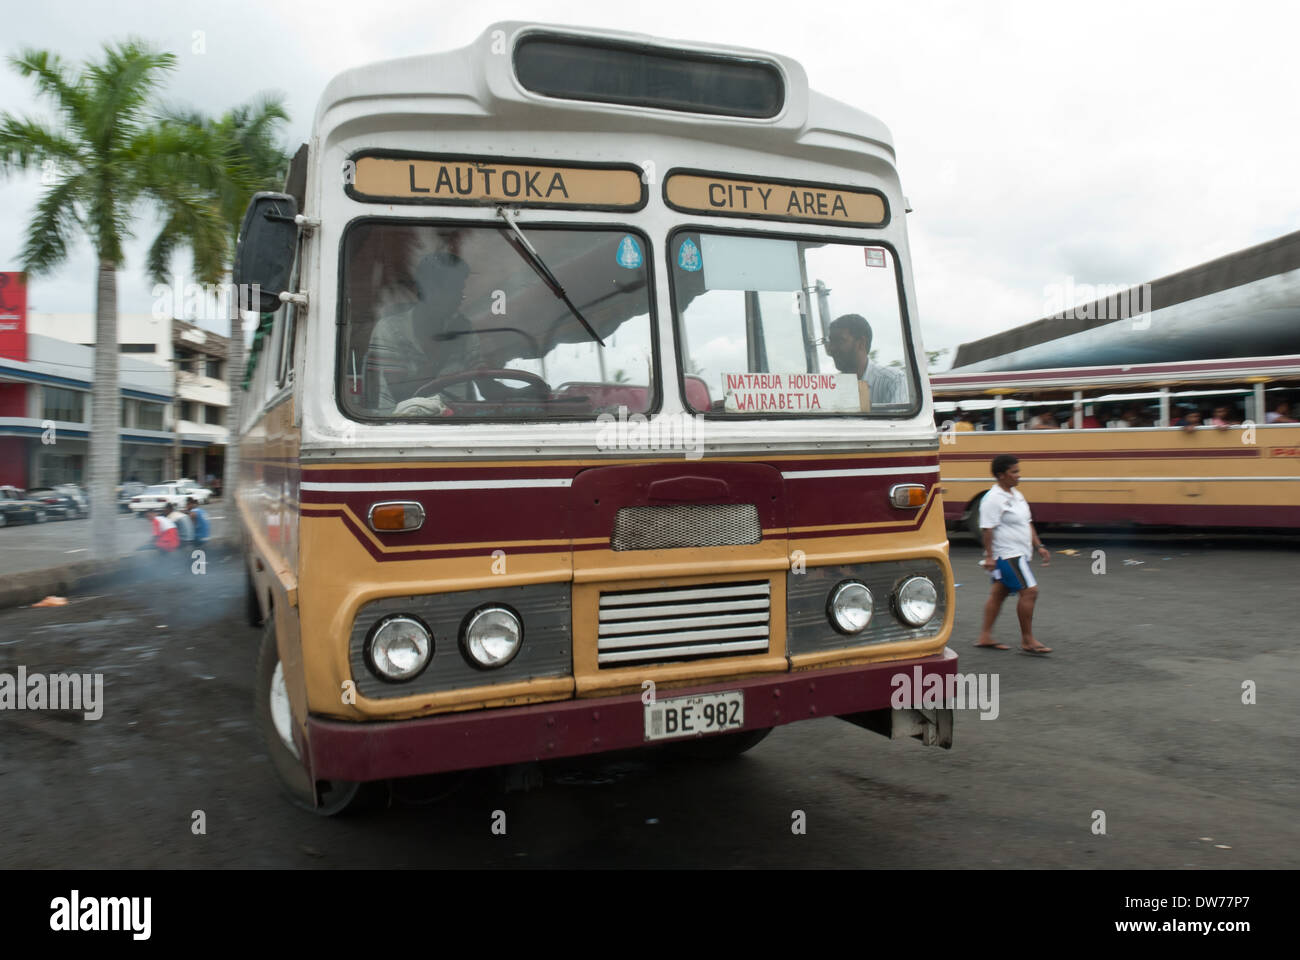 A bus departs Lautoka station on the west coast of Viti Levu, the main island of Fiji. Stock Photo